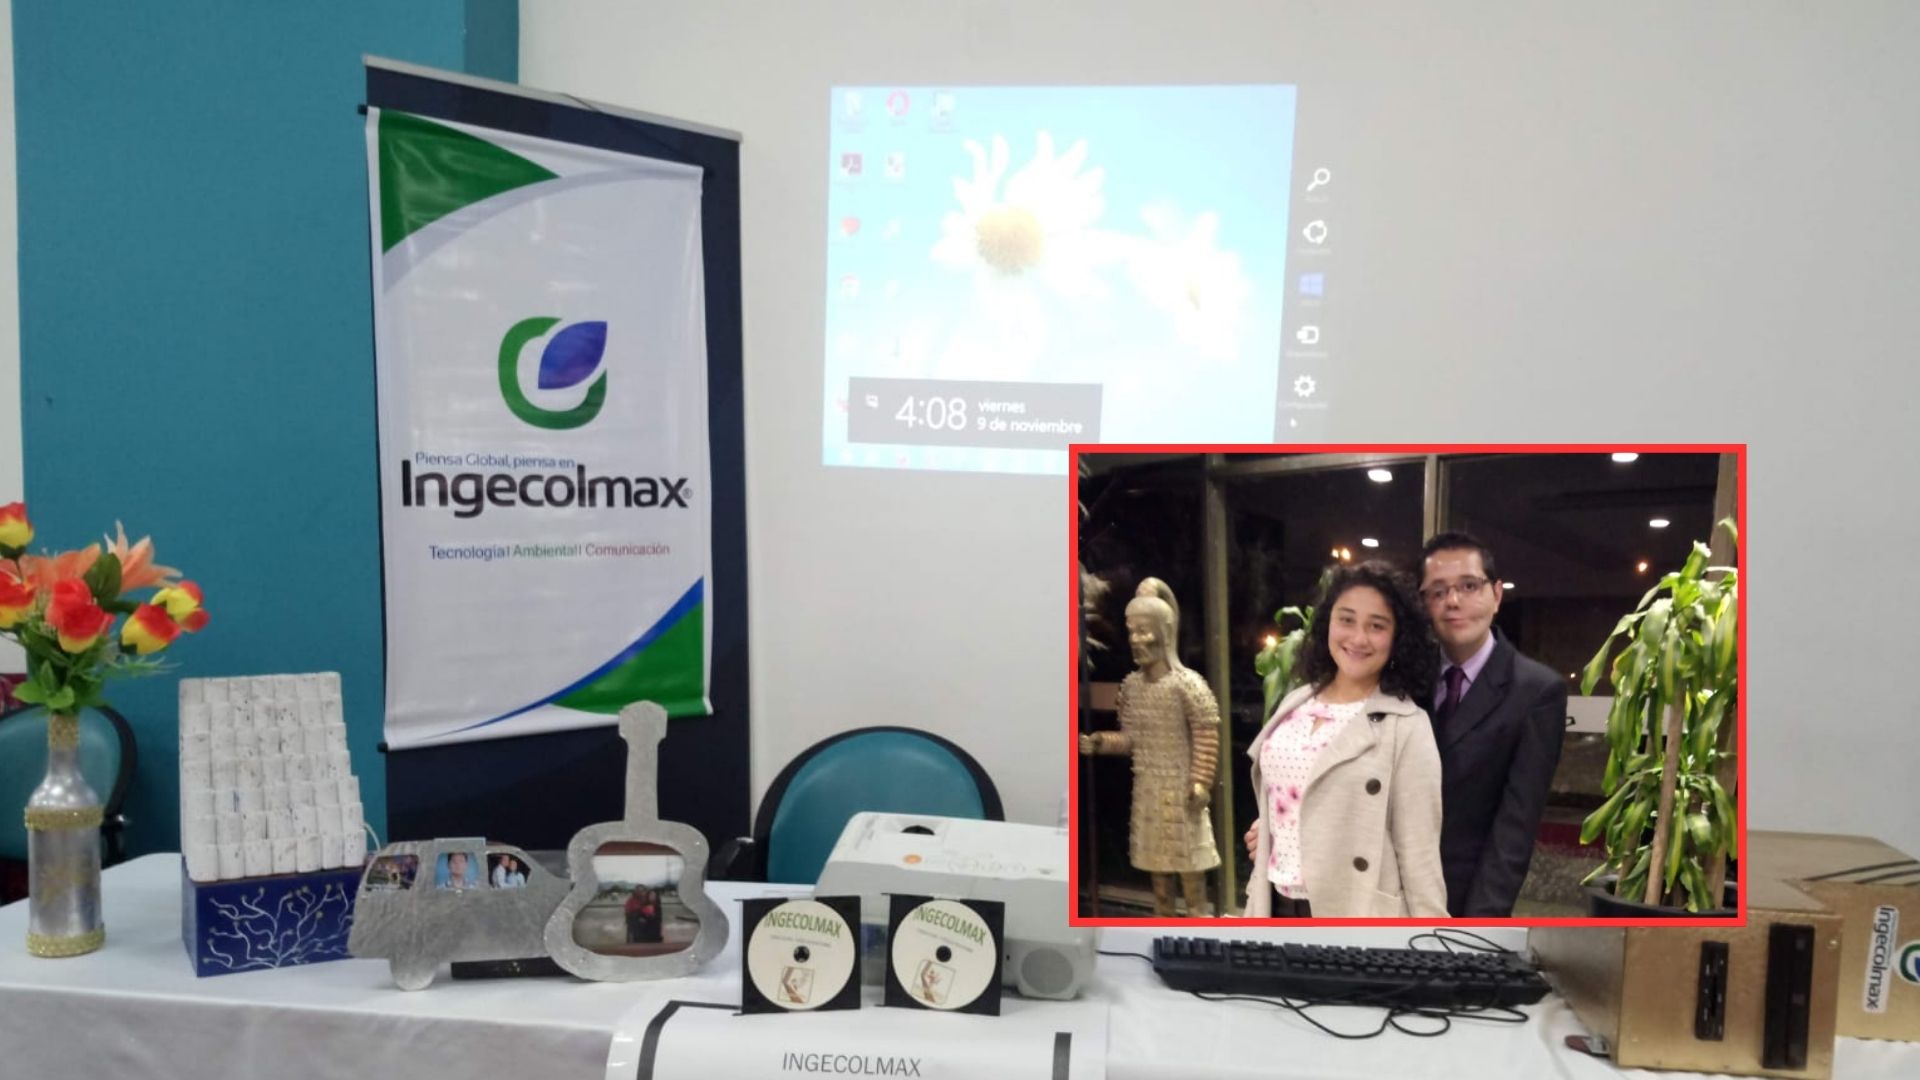 Historia de Ingecolmax. la empresa colombiana de computadores  biodegradables fundada por dos emprendedores.